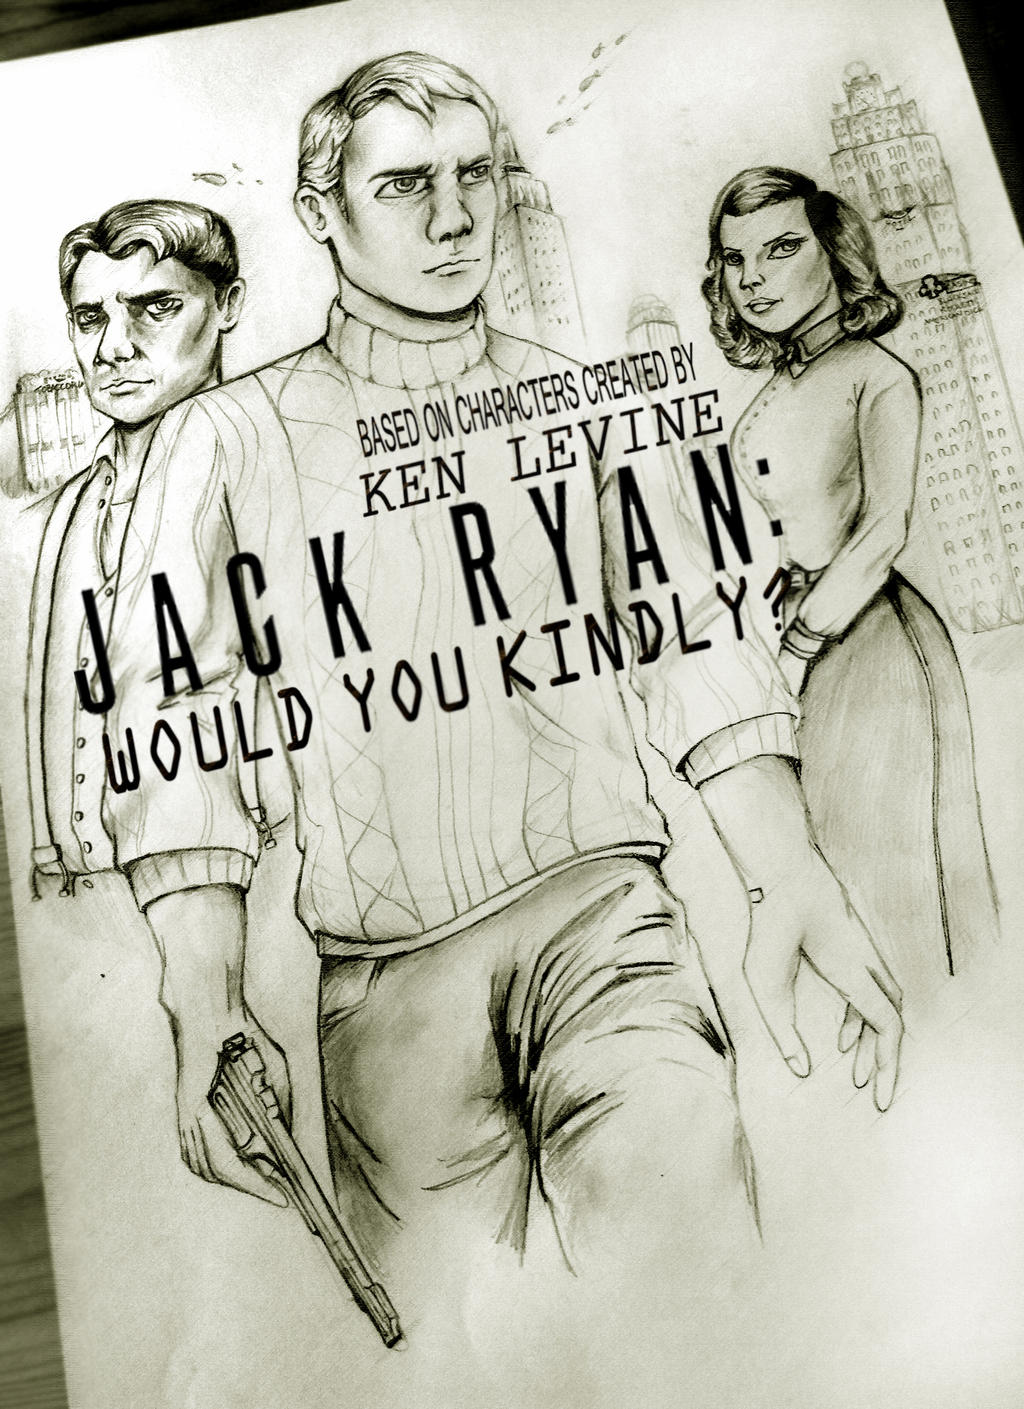 Jack Ryan: Would You Kindly?